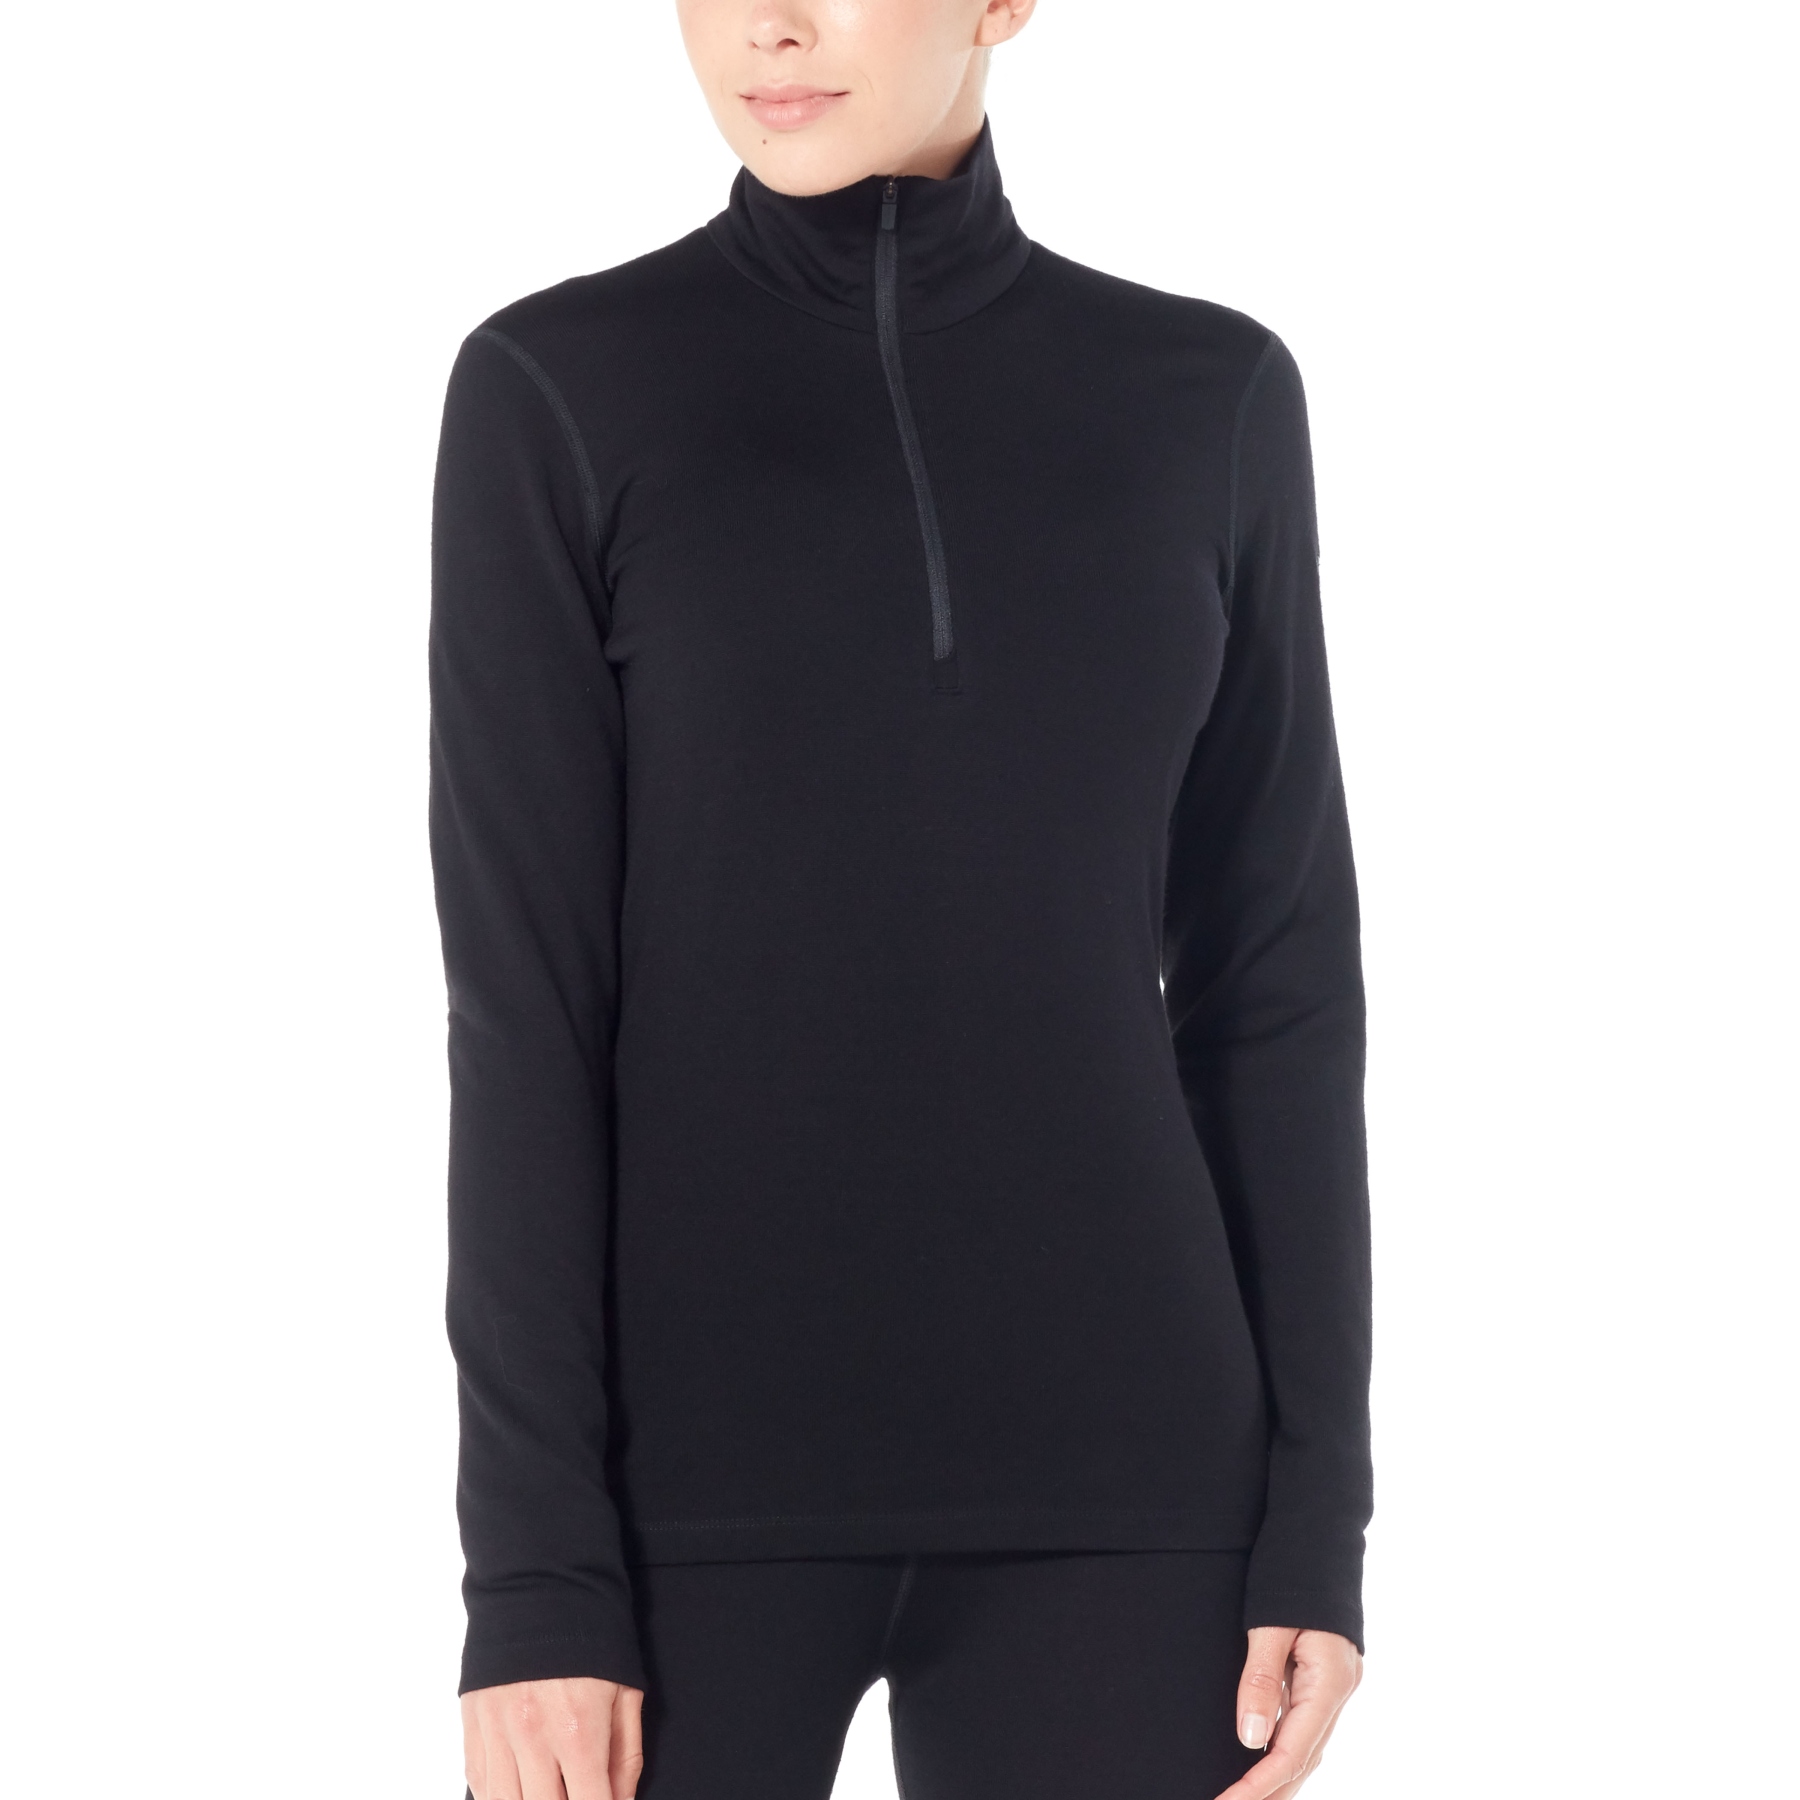 Image of Icebreaker Women's 260 Tech Half Zip Long Sleeve Shirt - Black